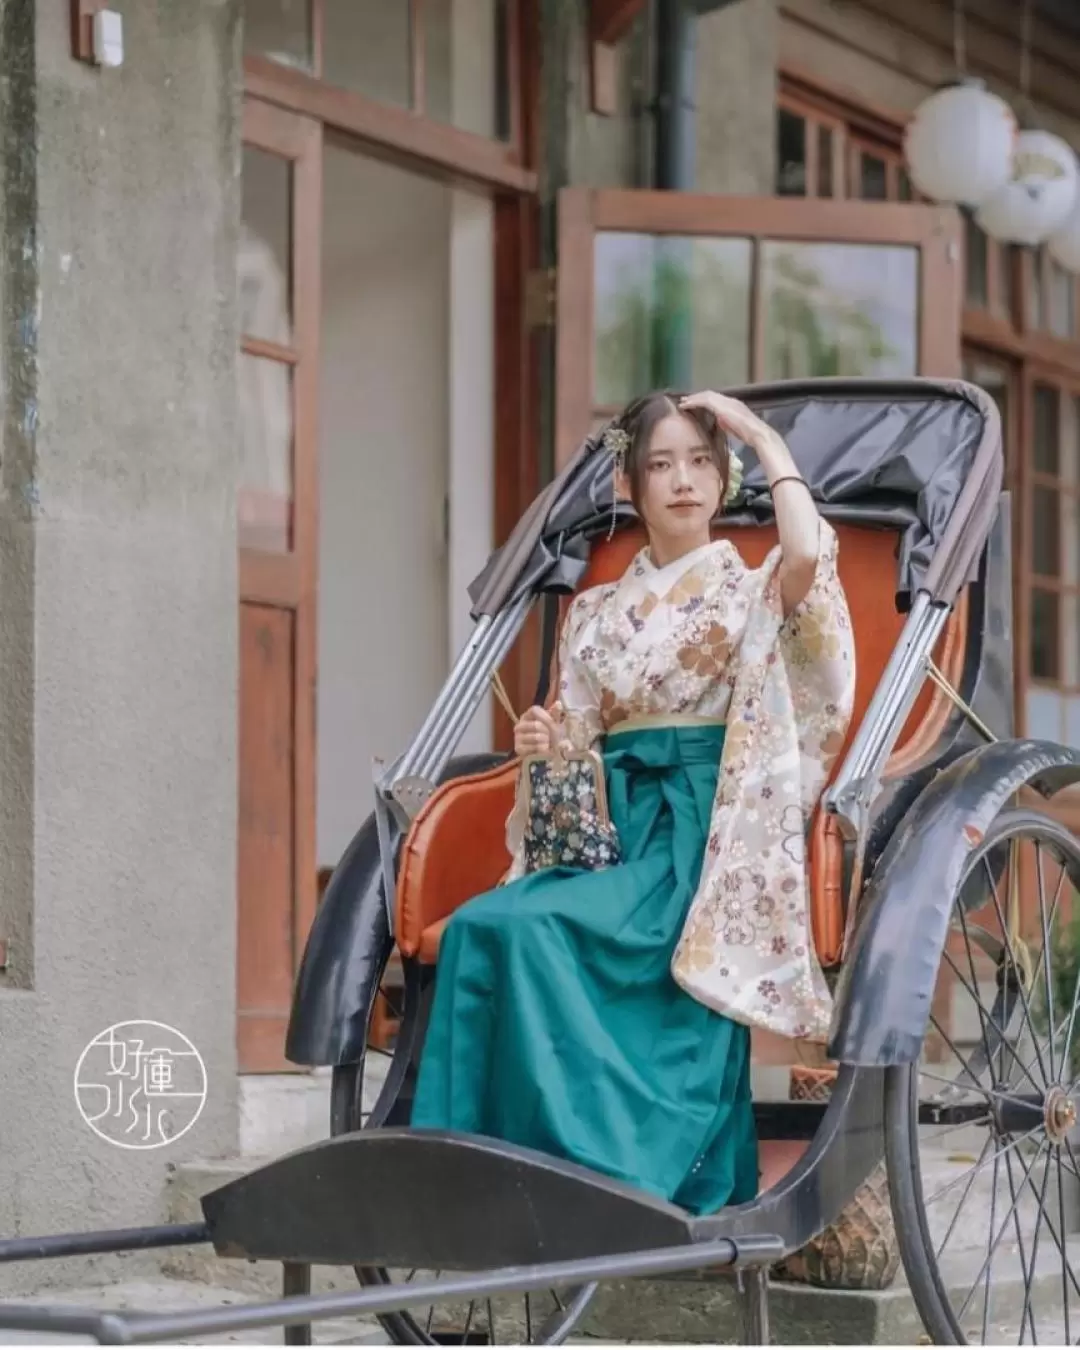 Pingtung｜Shengli Star Village Kimono Experience｜Free rental of Japanese accessories